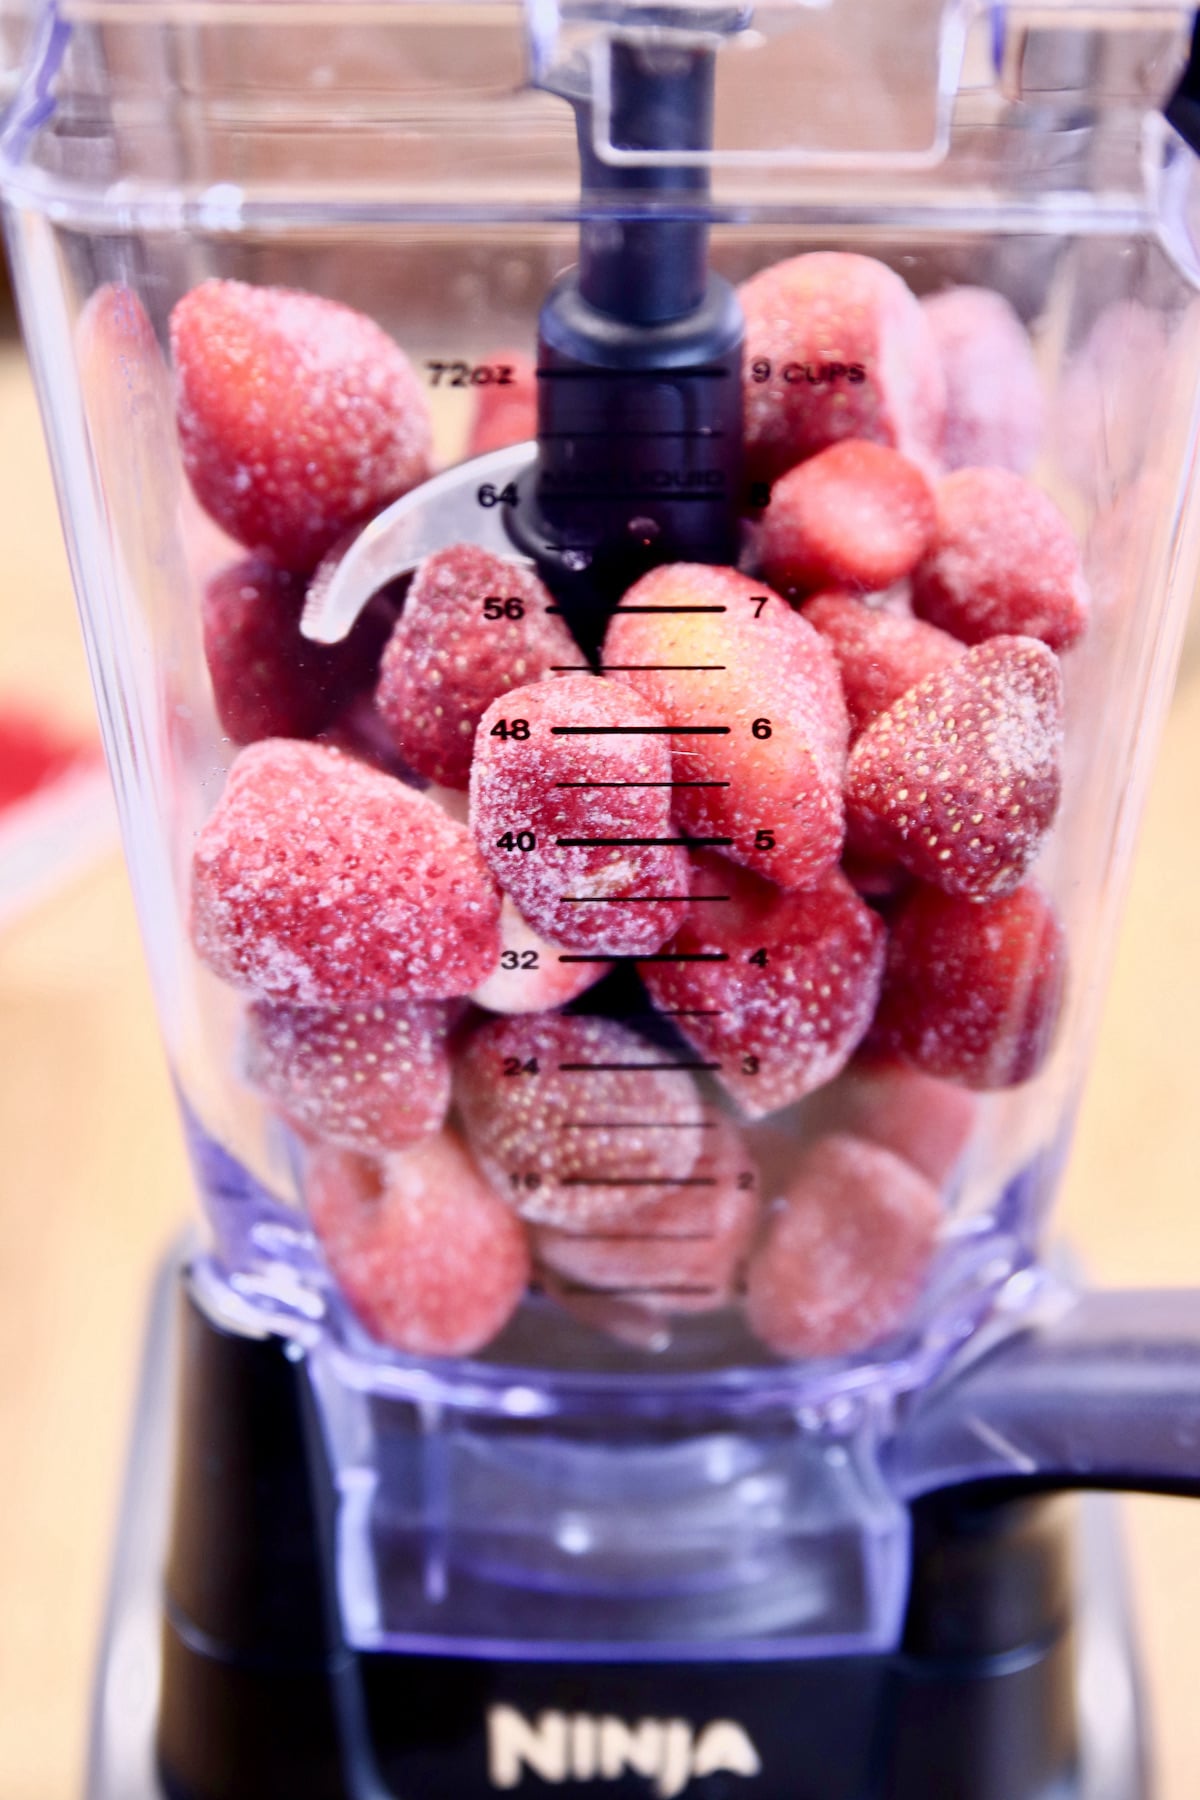 frozen strawberries in a blender